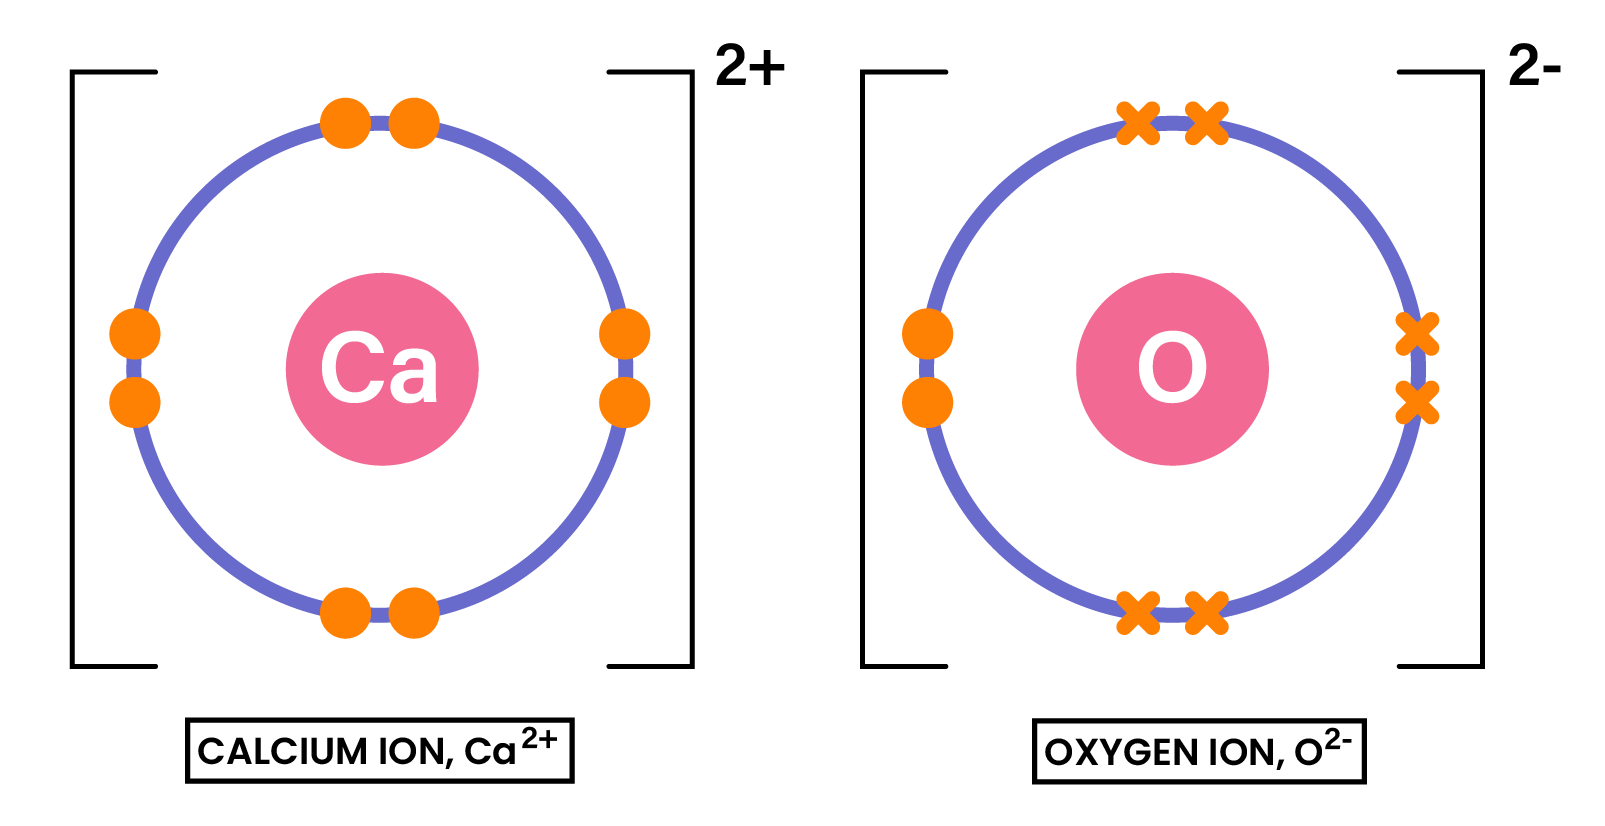 edexcel_igcse_chemistry_topic 06_ionic bonding_005_ionic dot and cross diagram charges